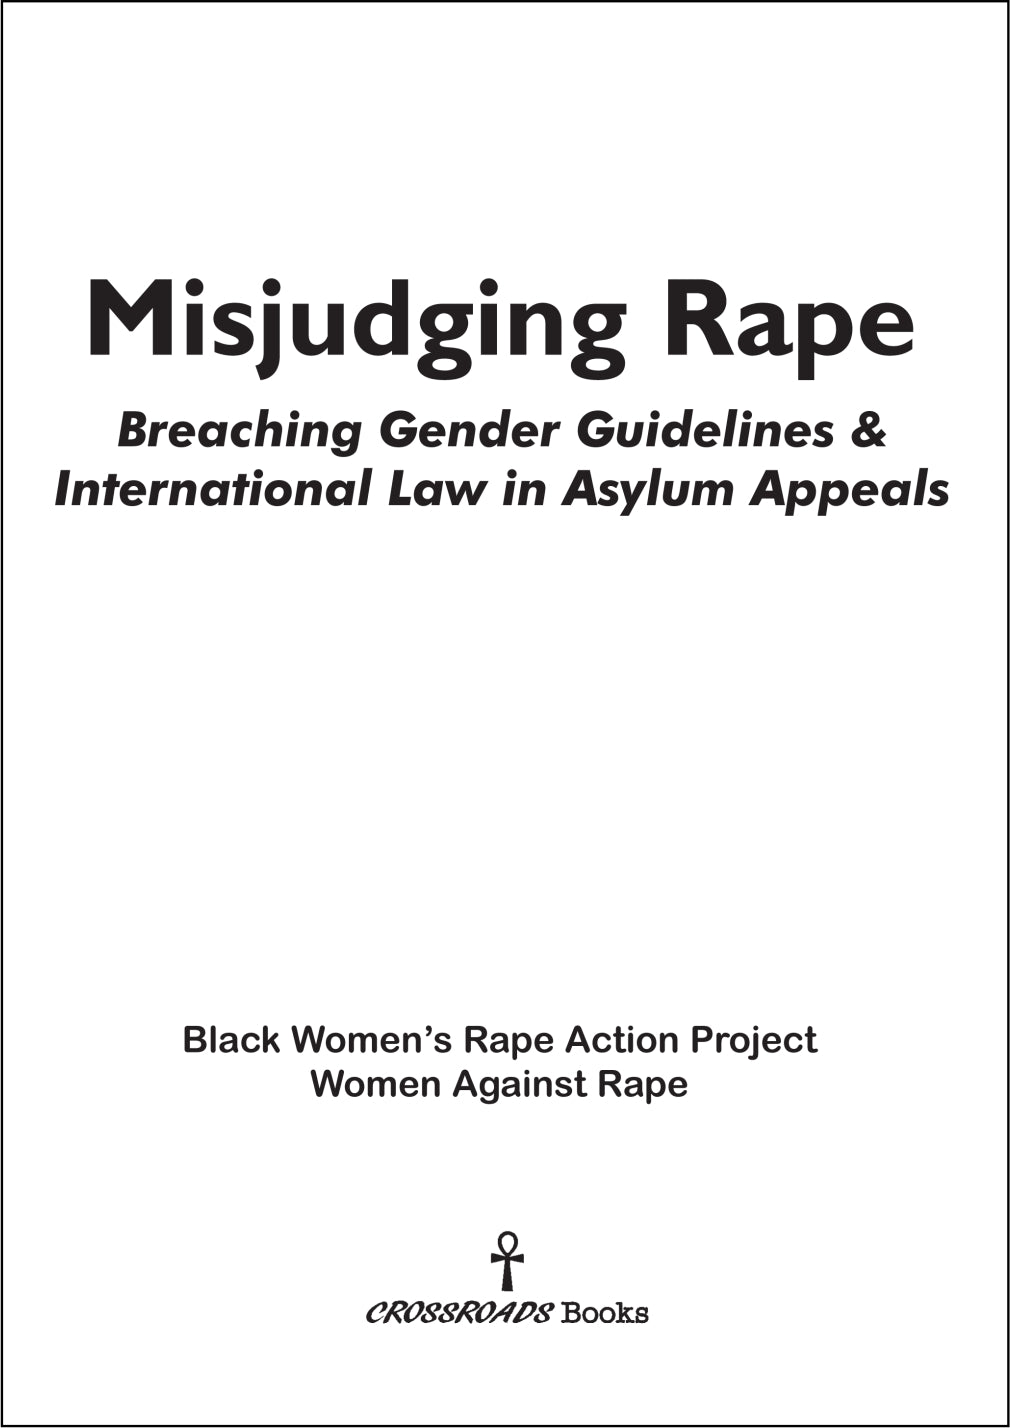 Misjudging Rape: Breaching Gender Guidelines and International Law in Asylum Appeals